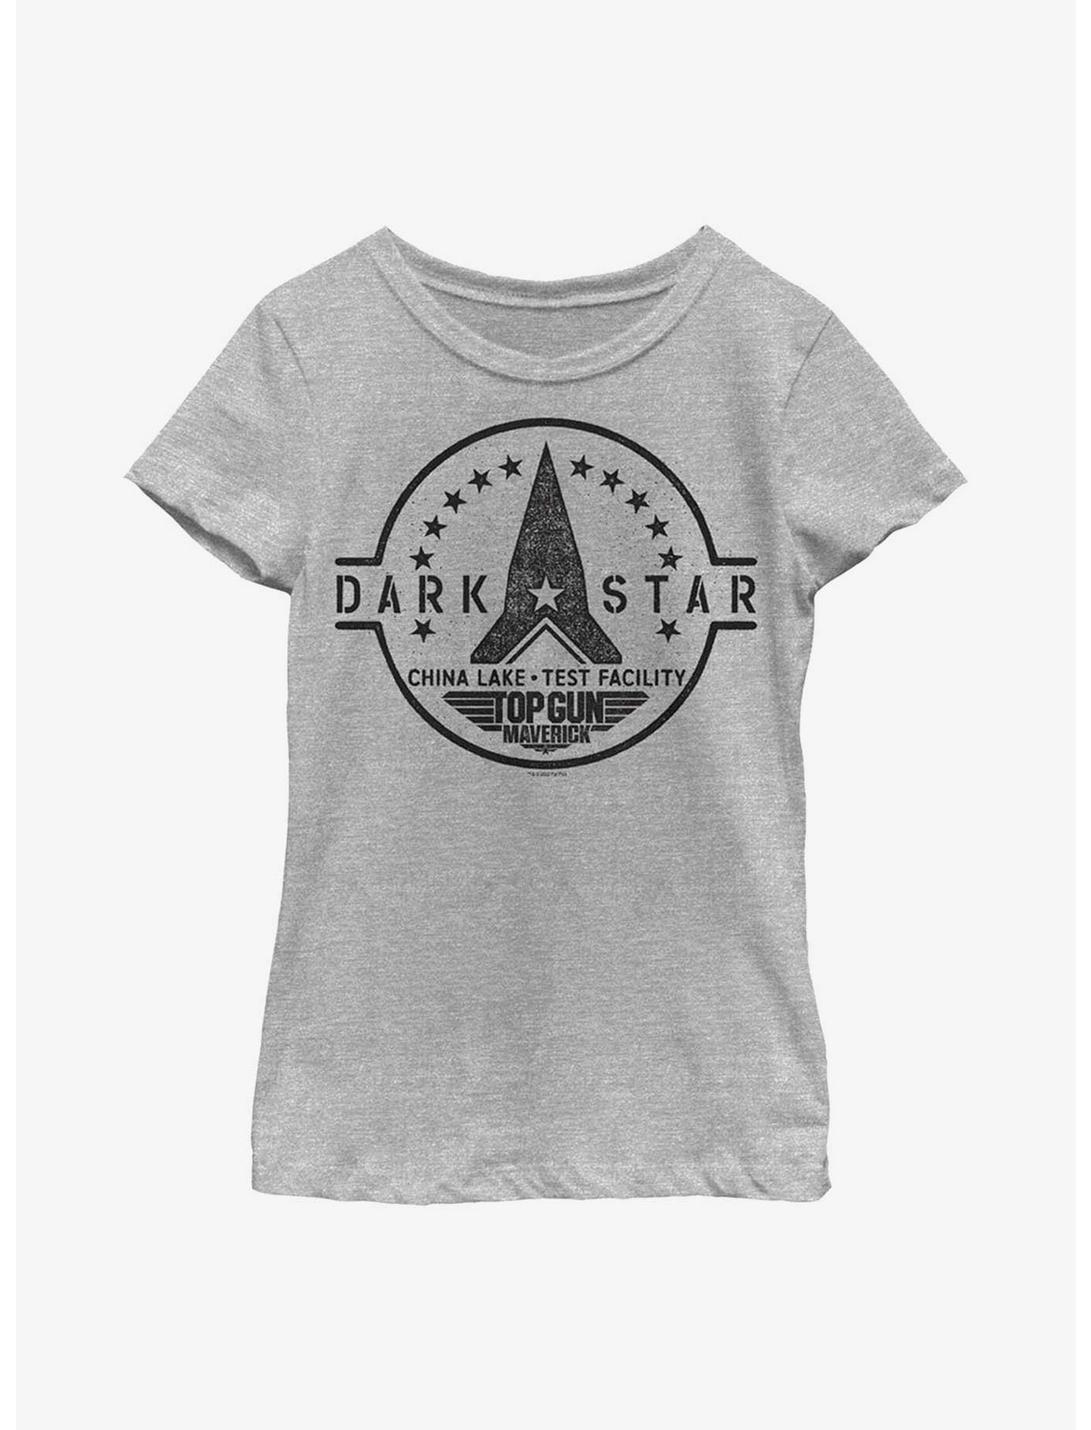 Top Gun: Maverick Dark Star Youth Girls T-Shirt, ATH HTR, hi-res